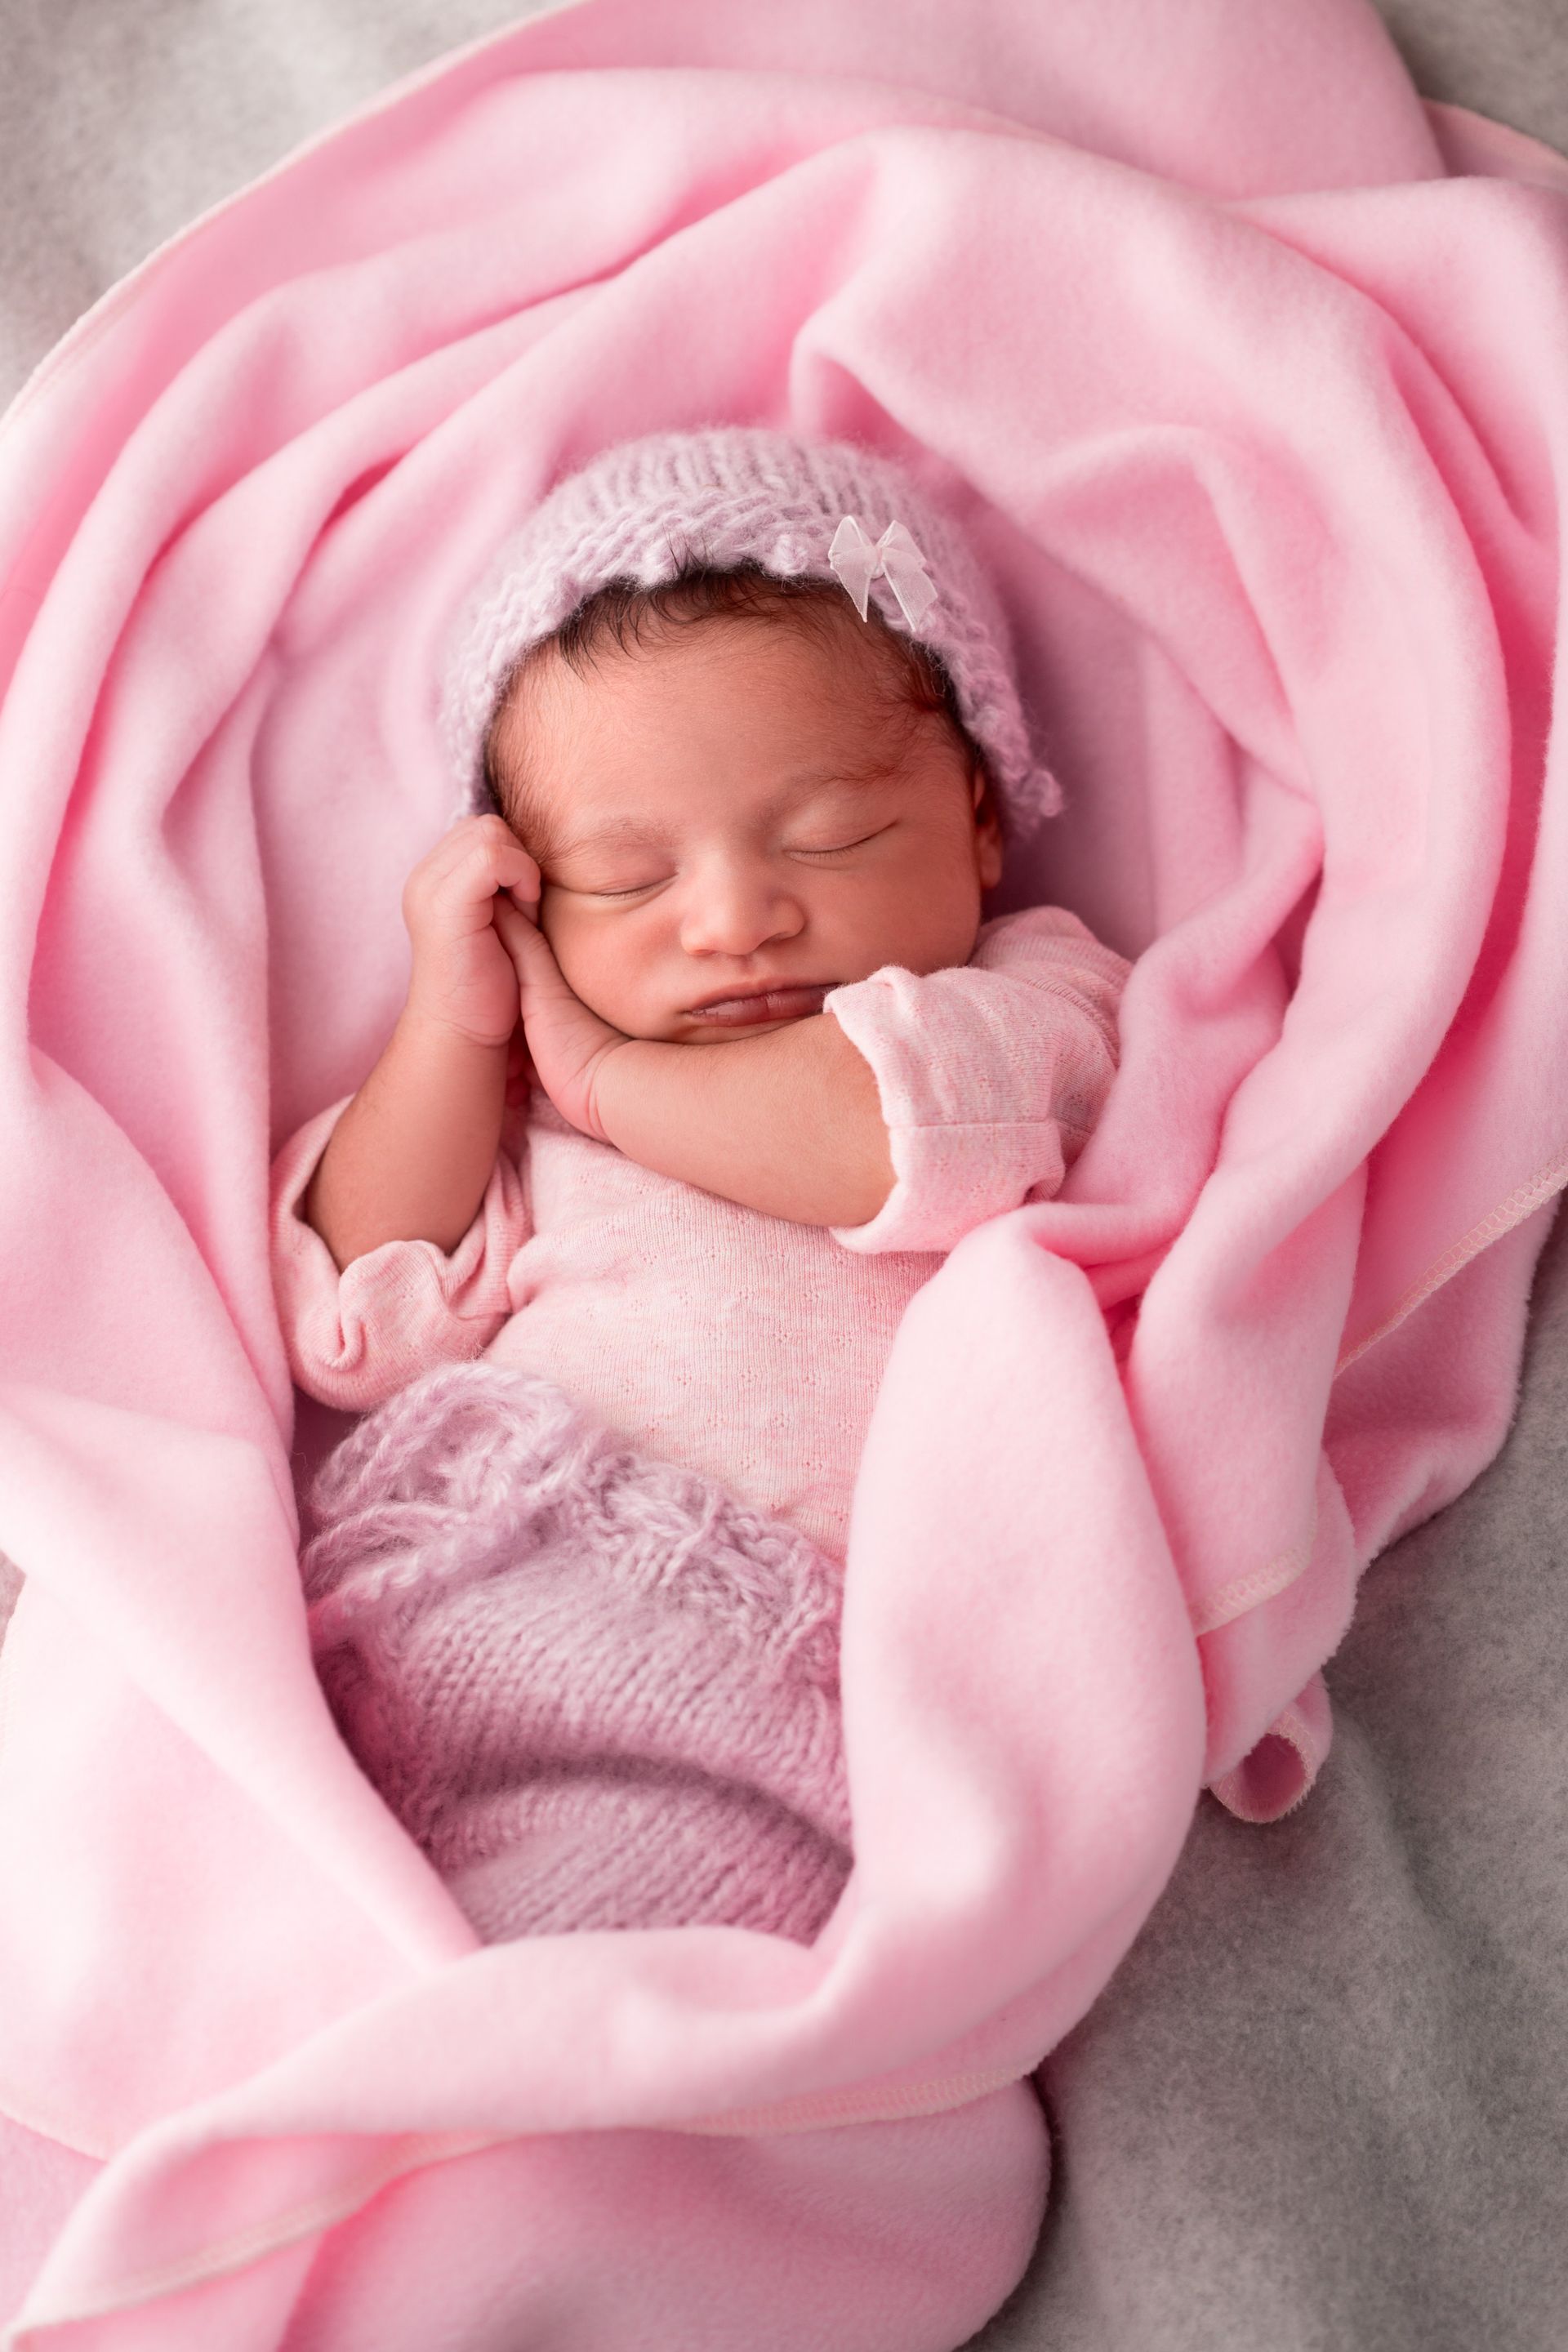 A newborn girl sleeping in a pink blanket.